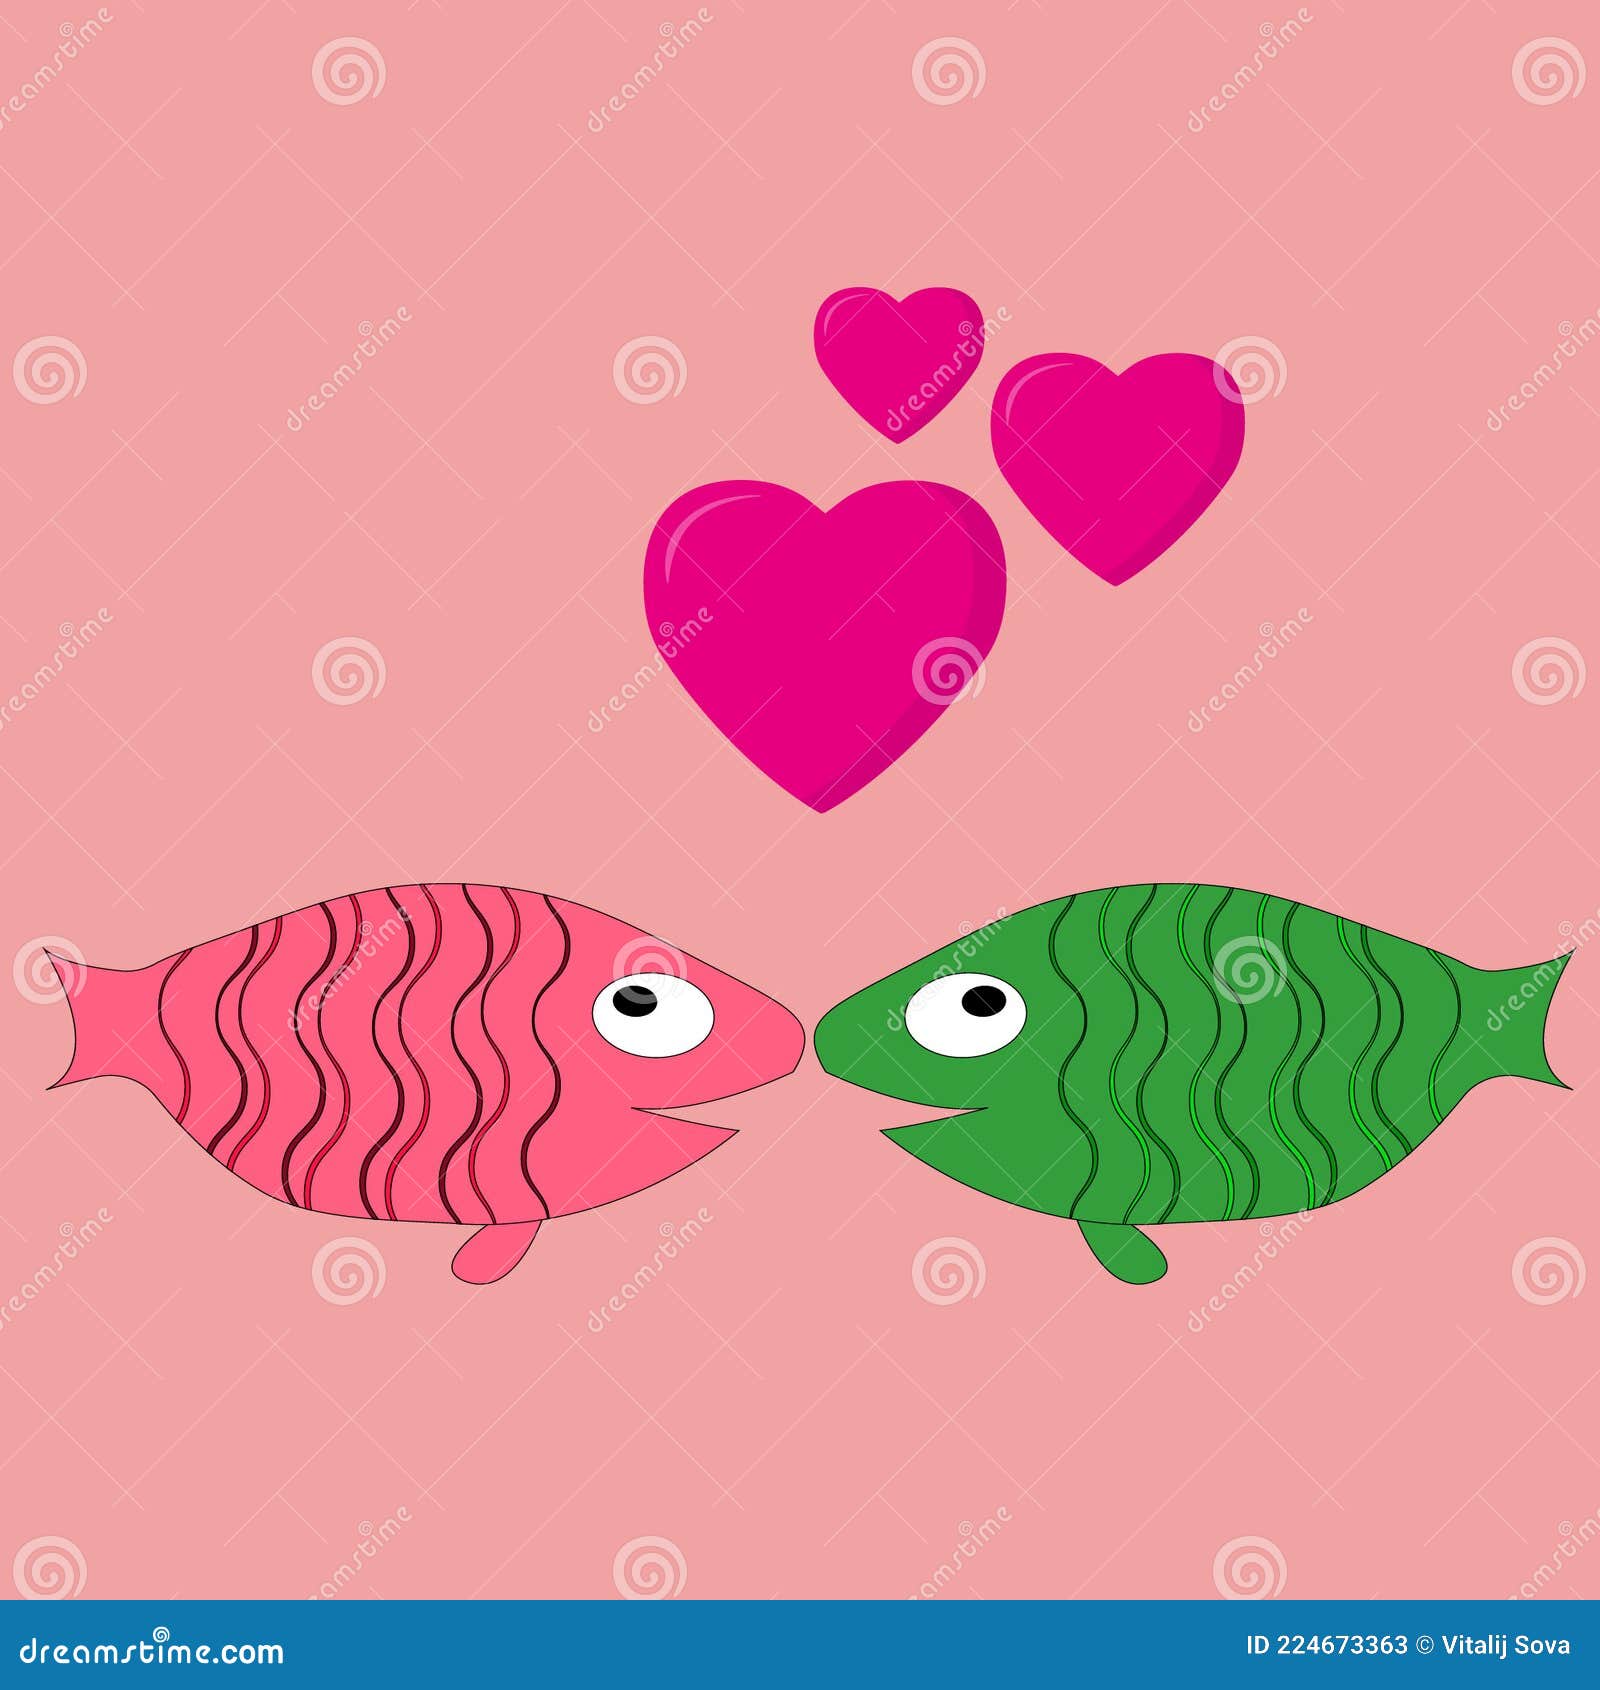 Fish set stock illustration. Illustration of letters - 224673363